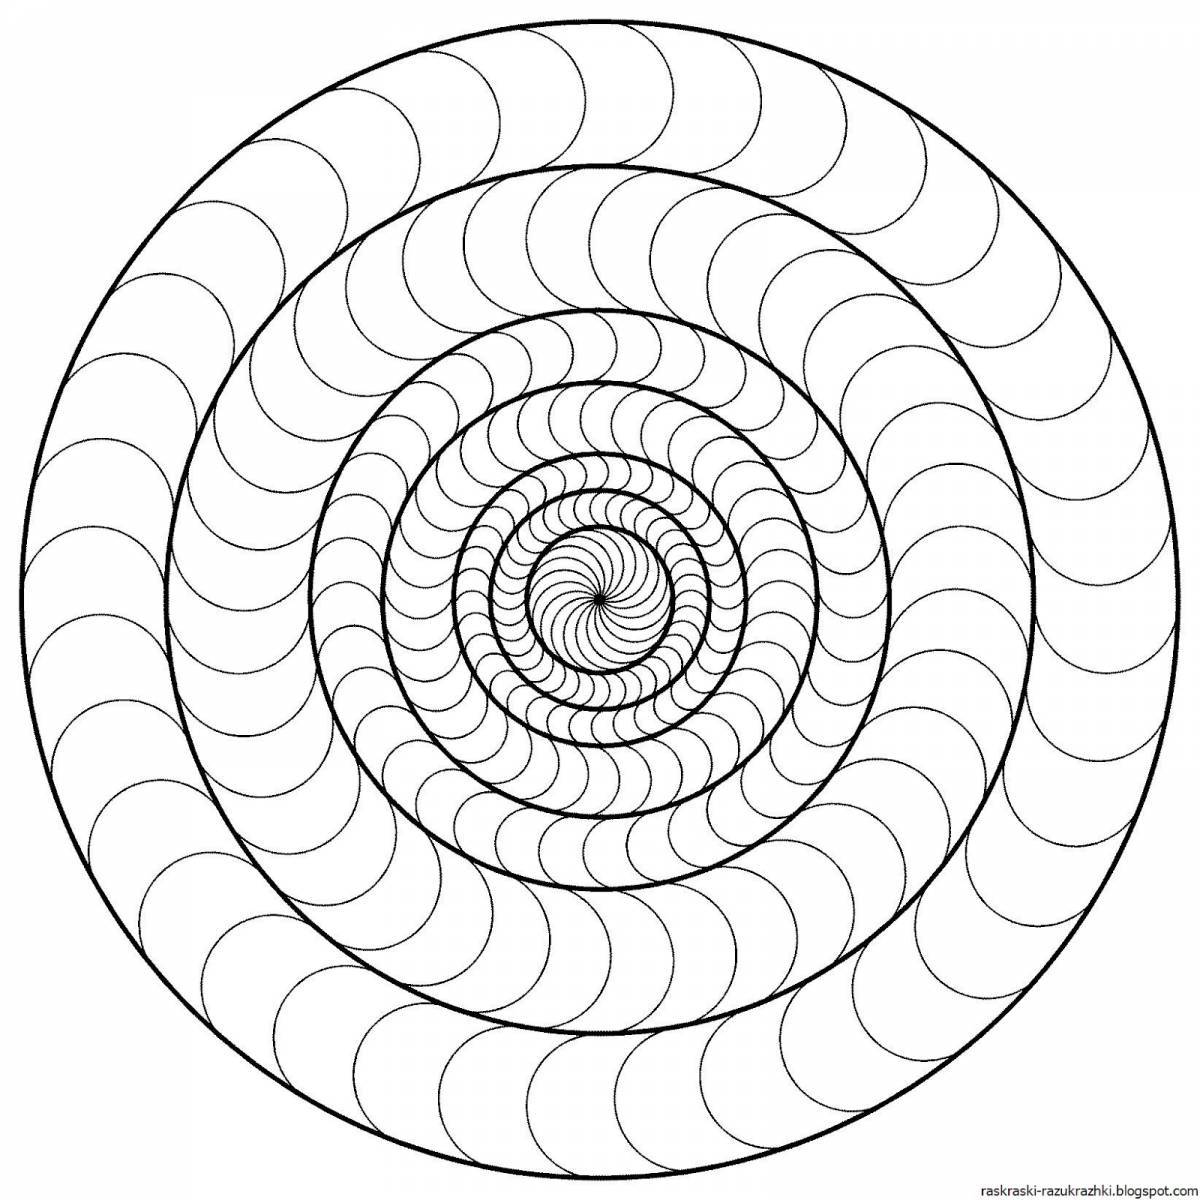 Exquisite circular spiral coloring